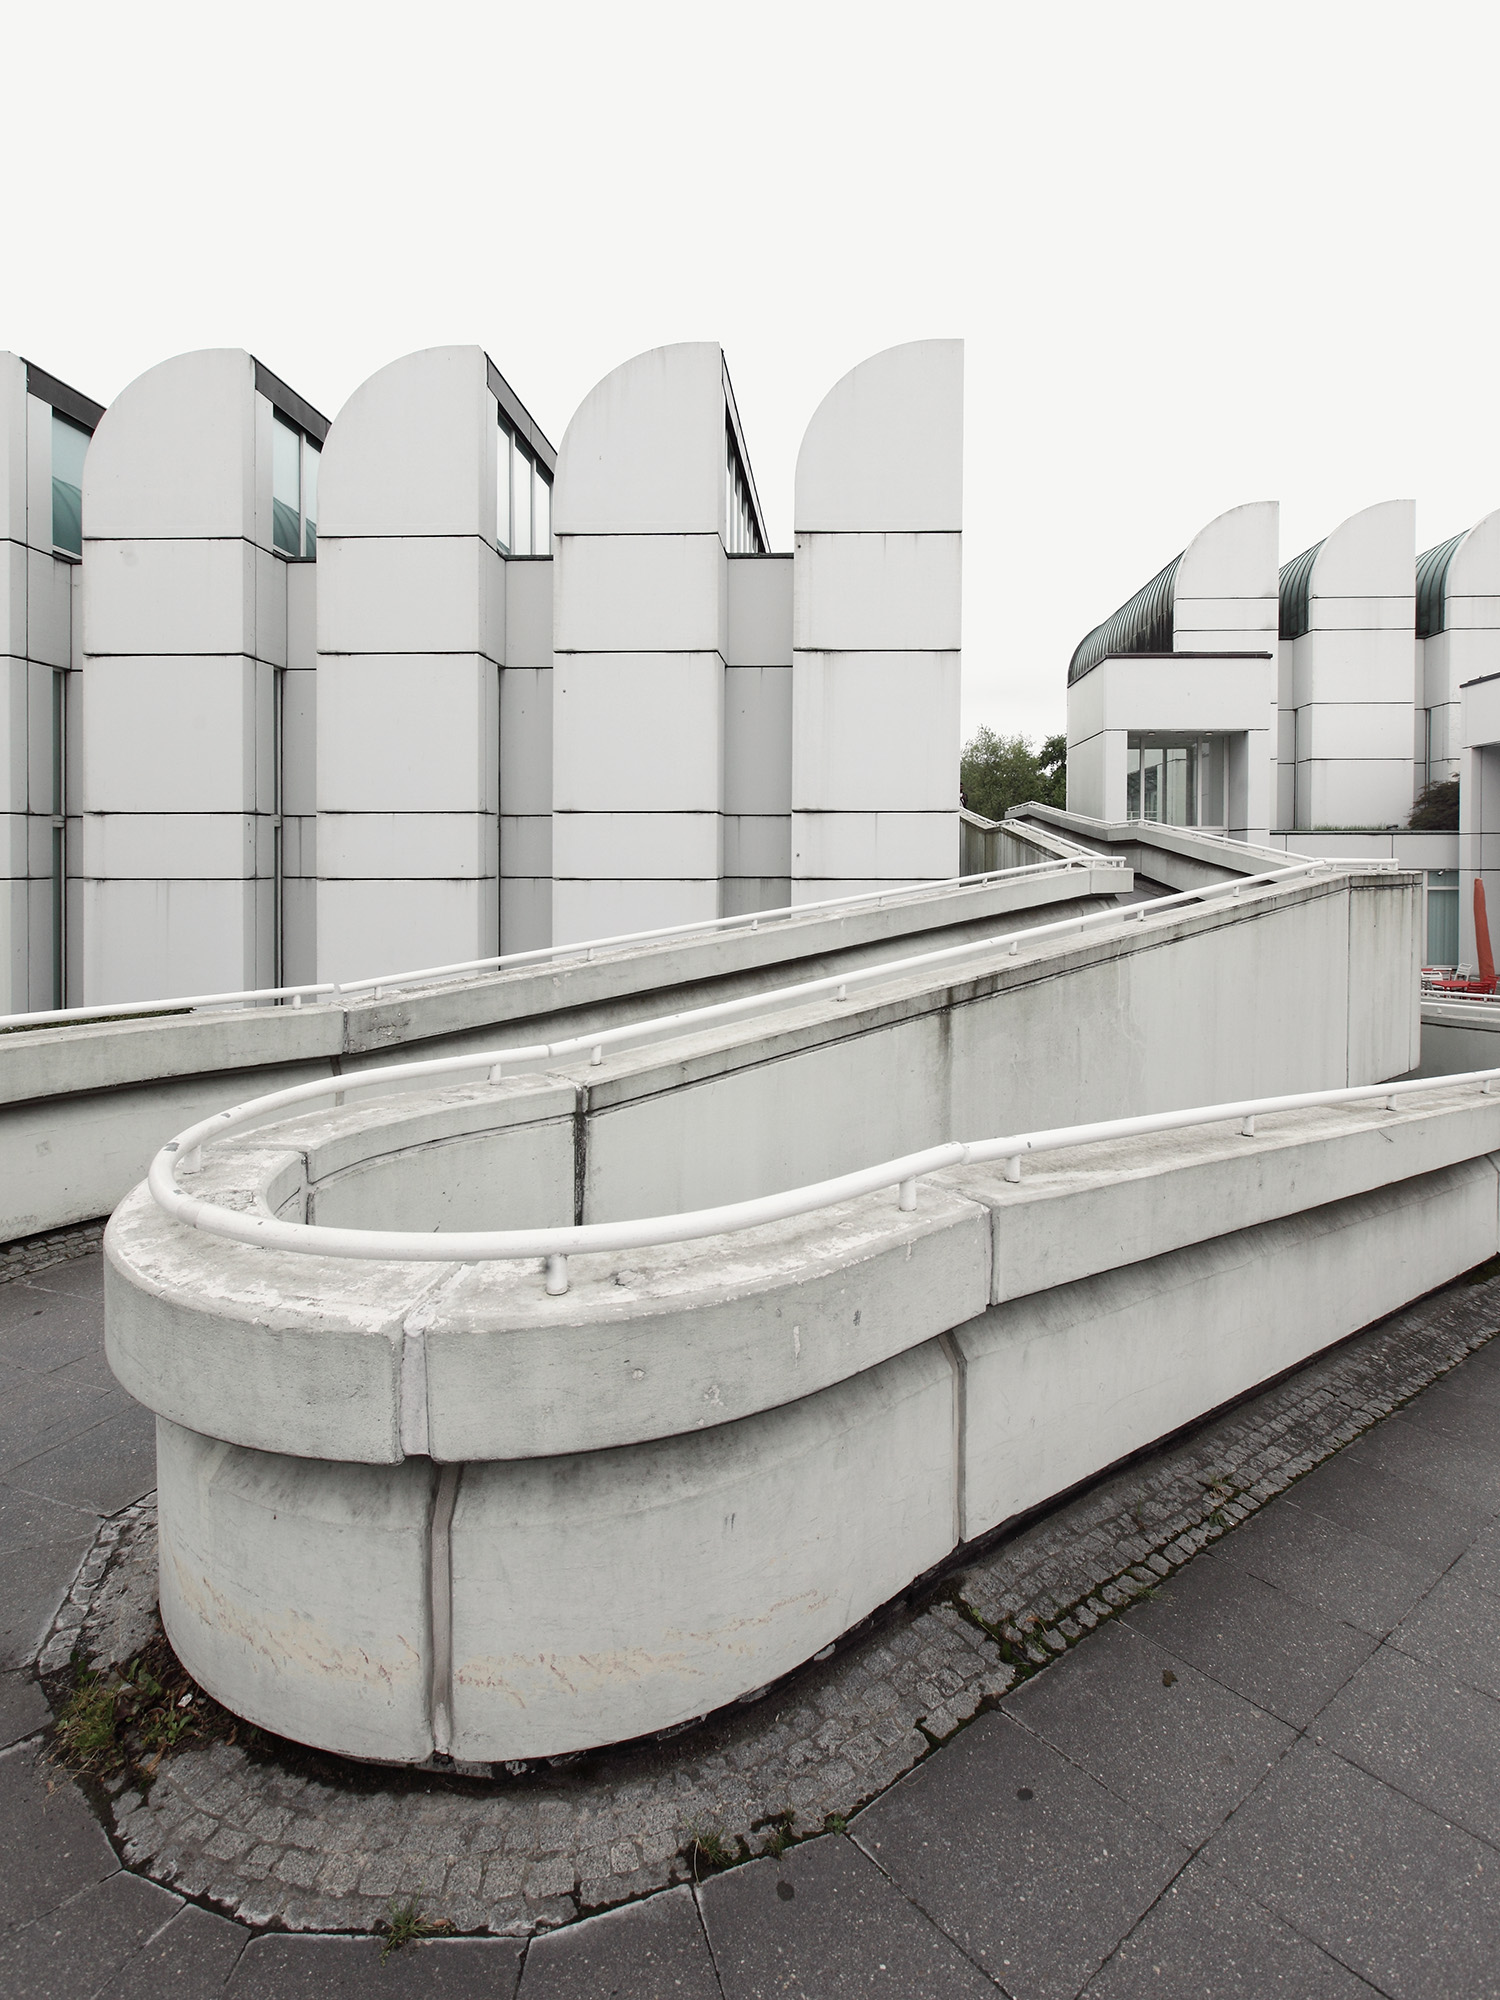 Bauhaus archiv
Walter Gropius, 1976-79
Berlín